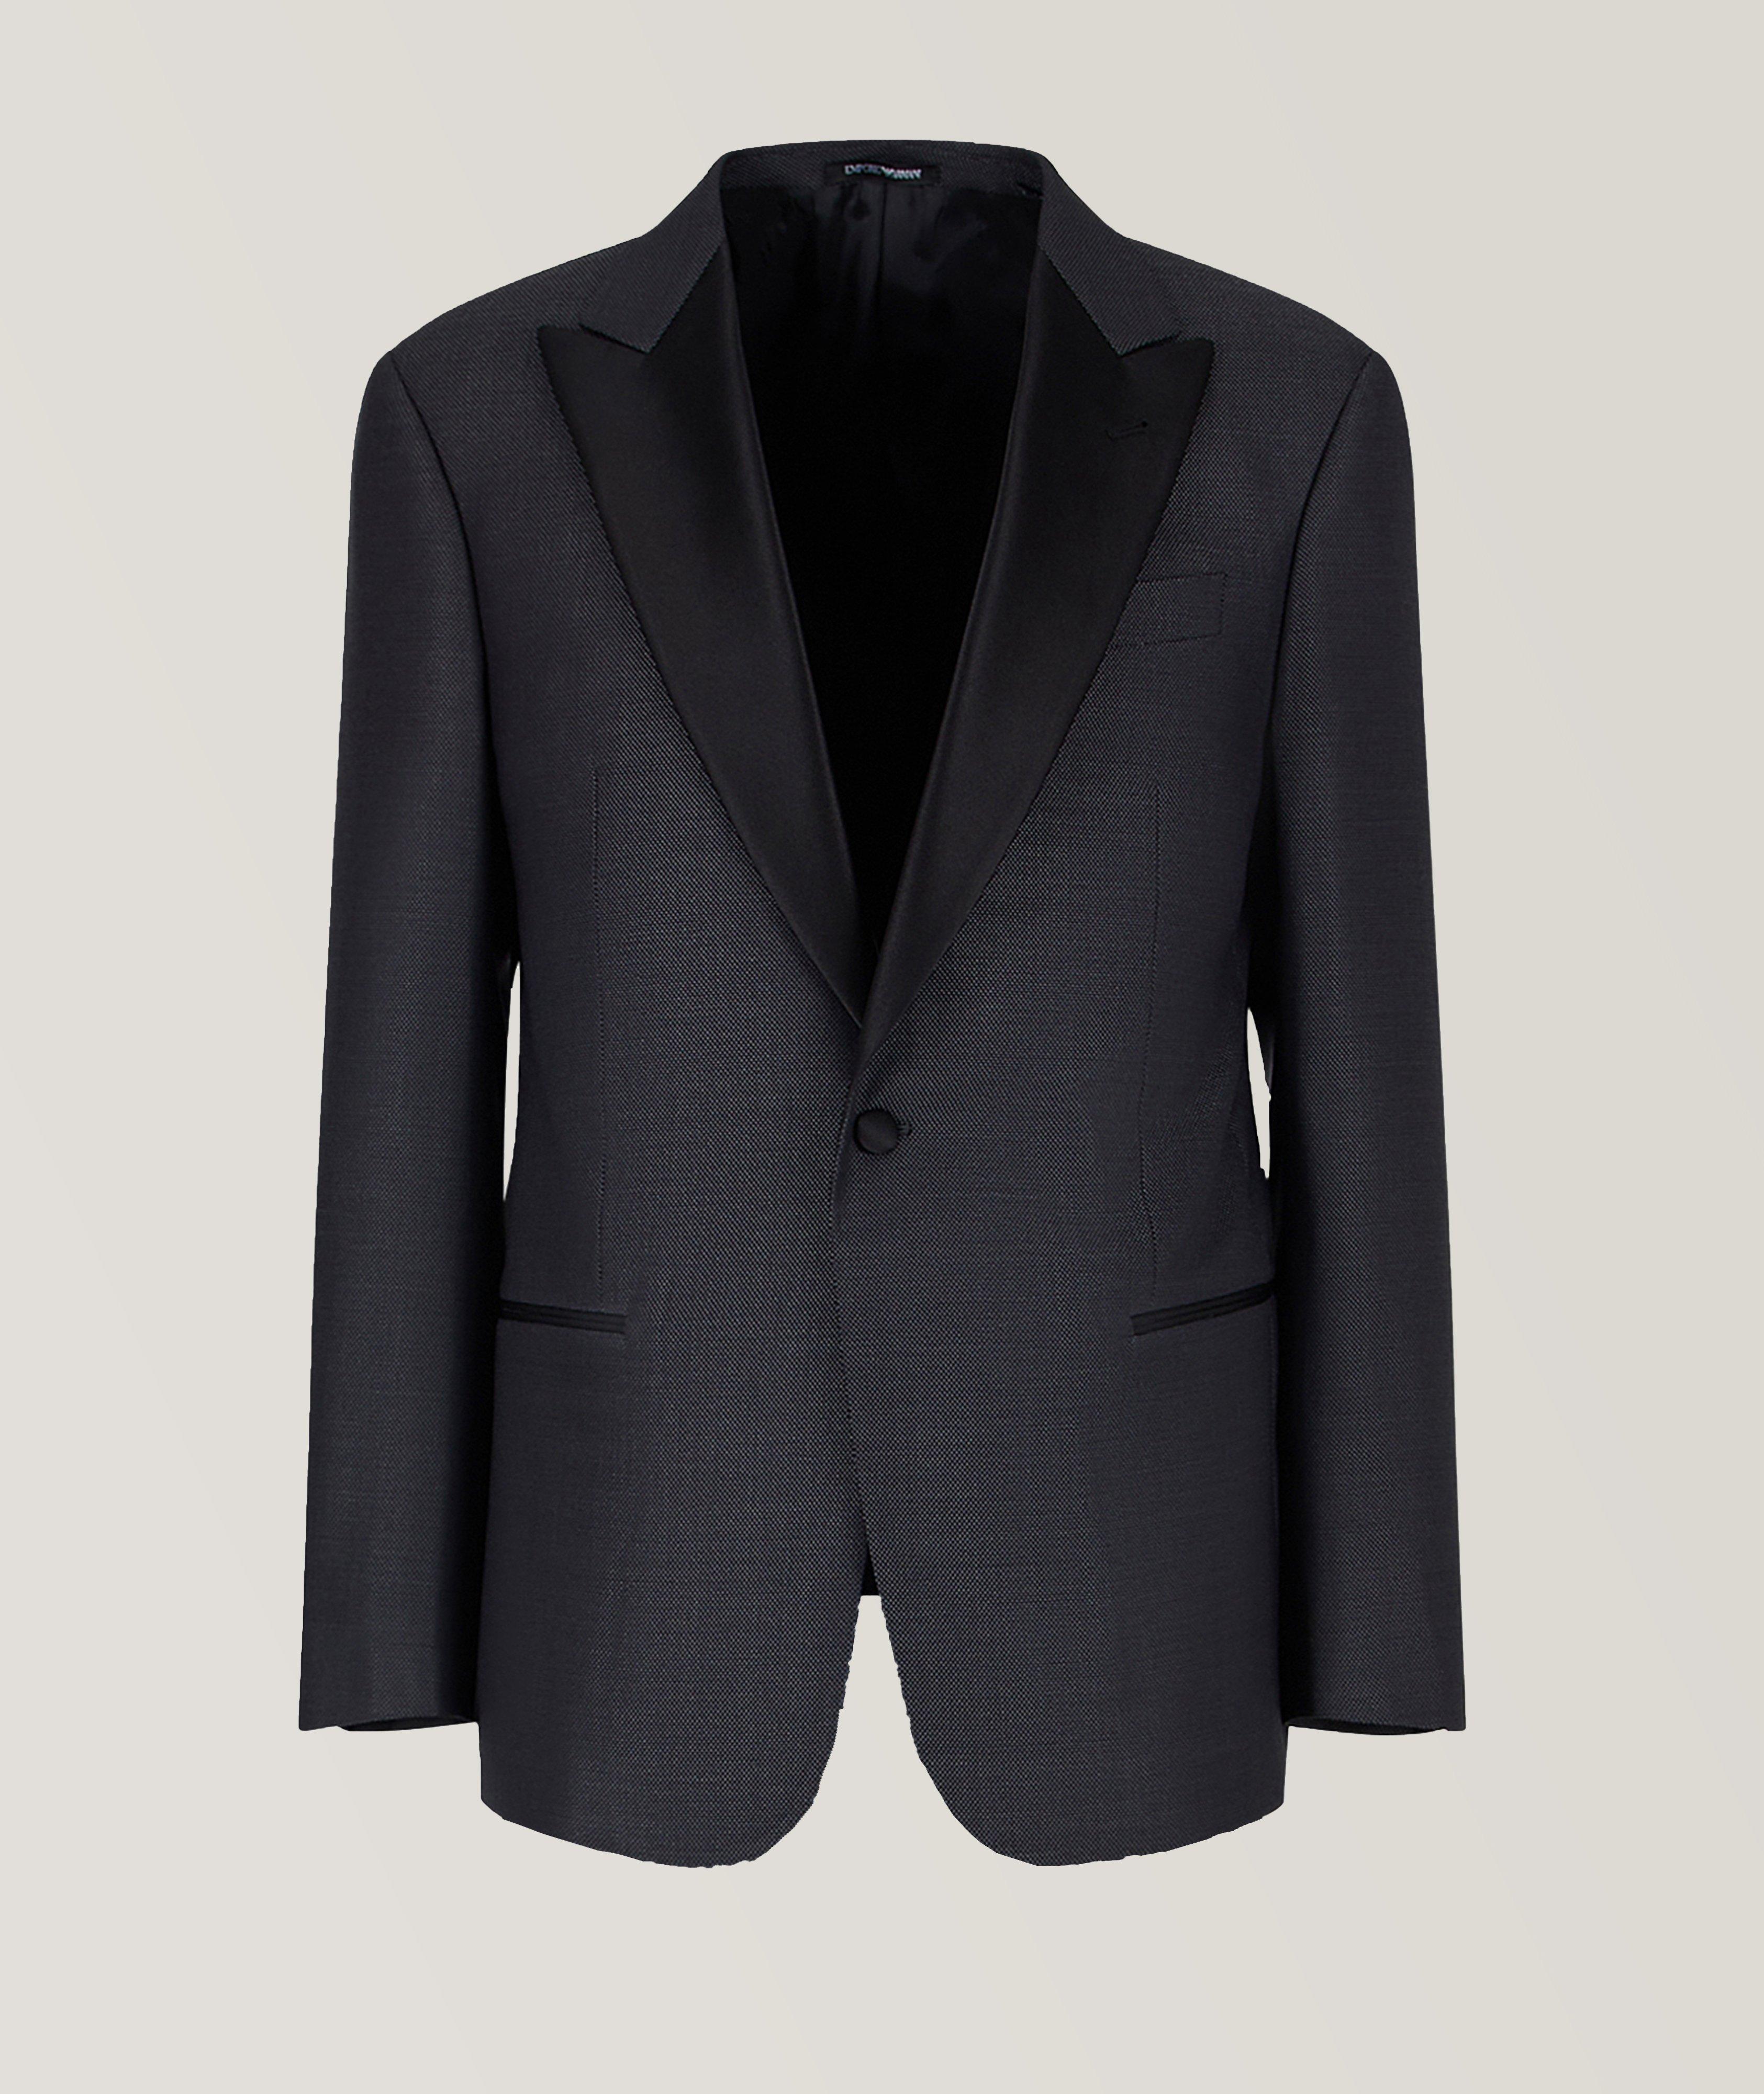 G-Line Pin Dot Virgin Wool & Silk-Stretch Suit image 0